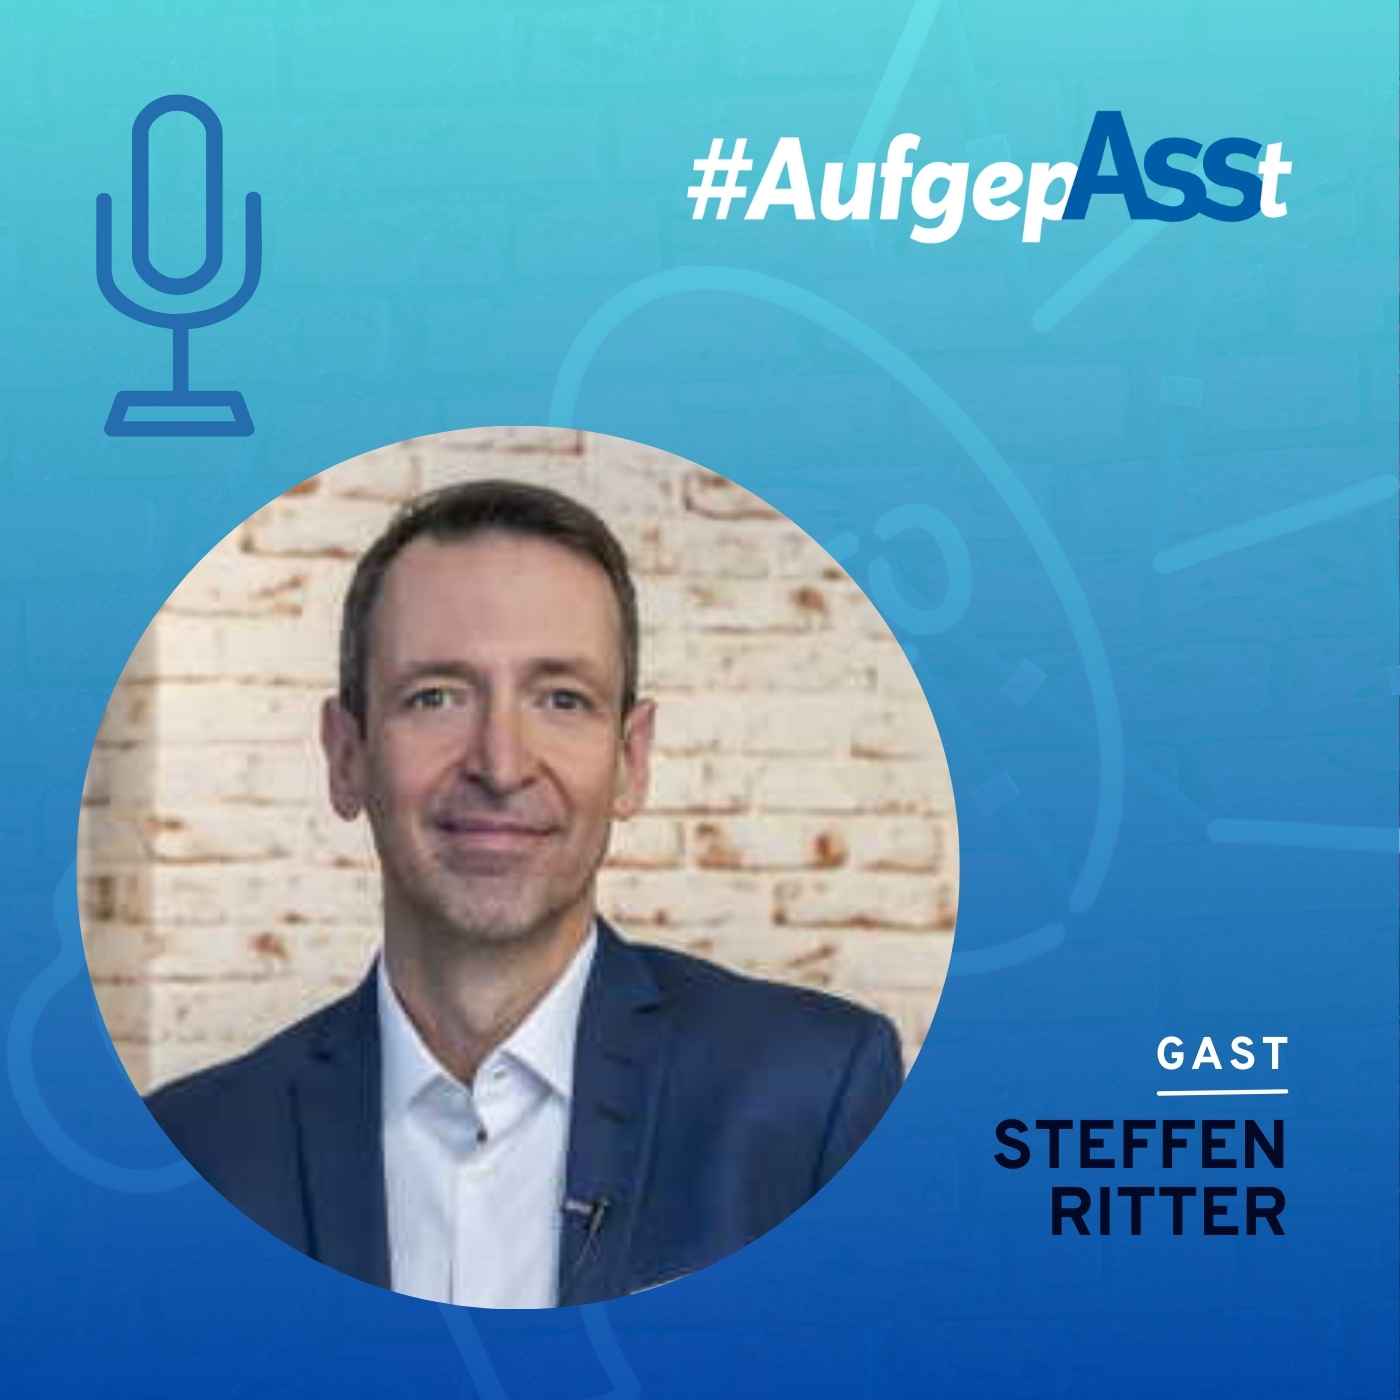 AufgepASSt - AssCompact im Gespräch mit Steffen Ritter